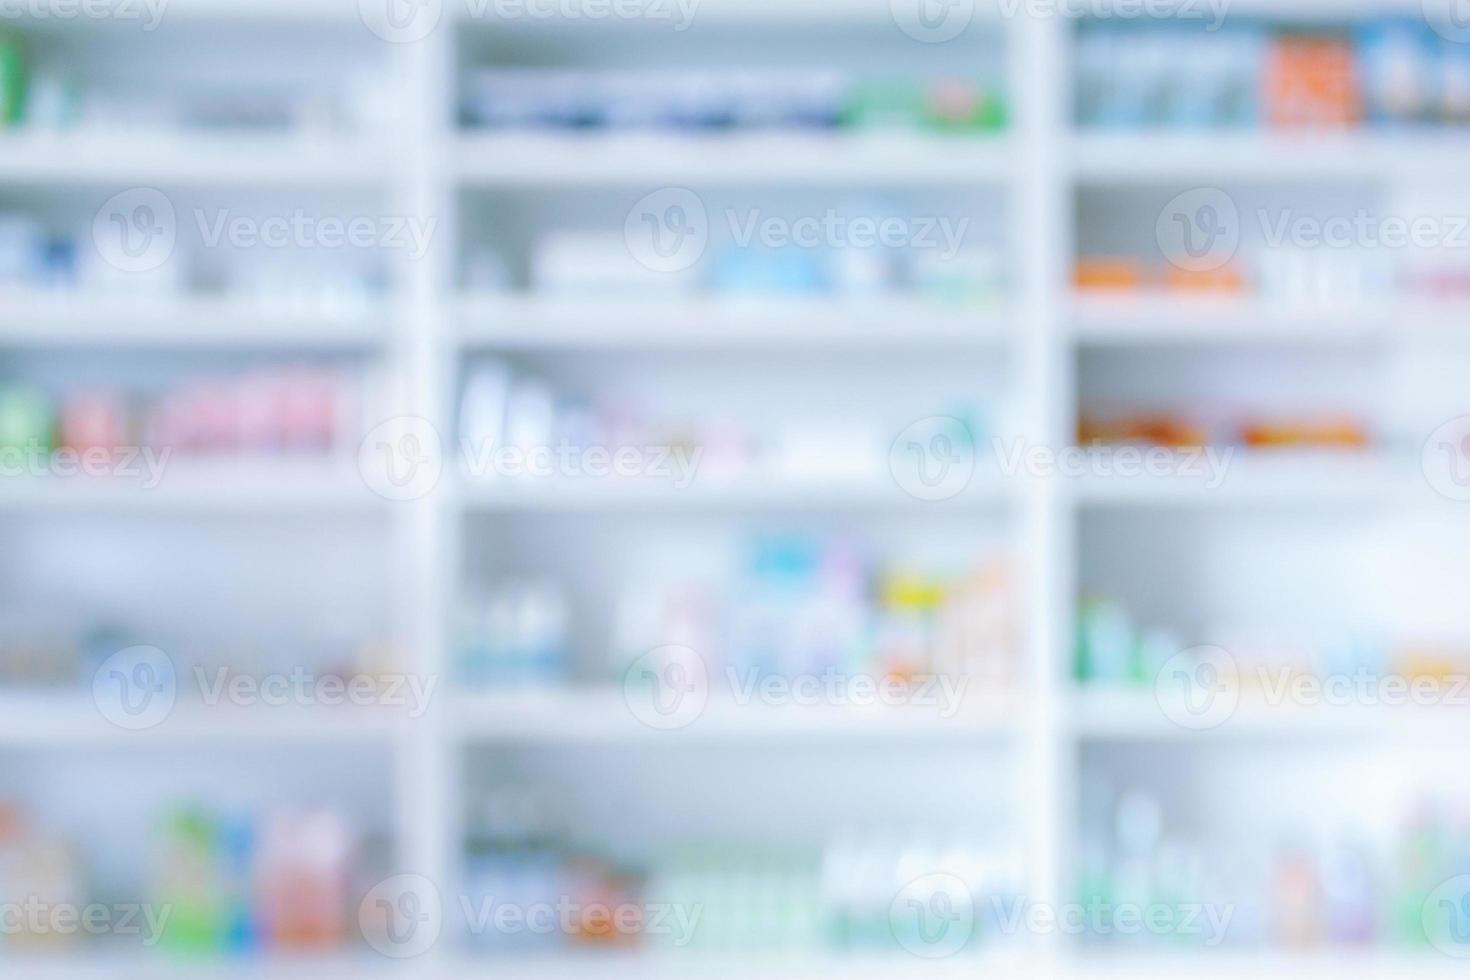 farmacia droguería estantes interior fondo abstracto borroso foto